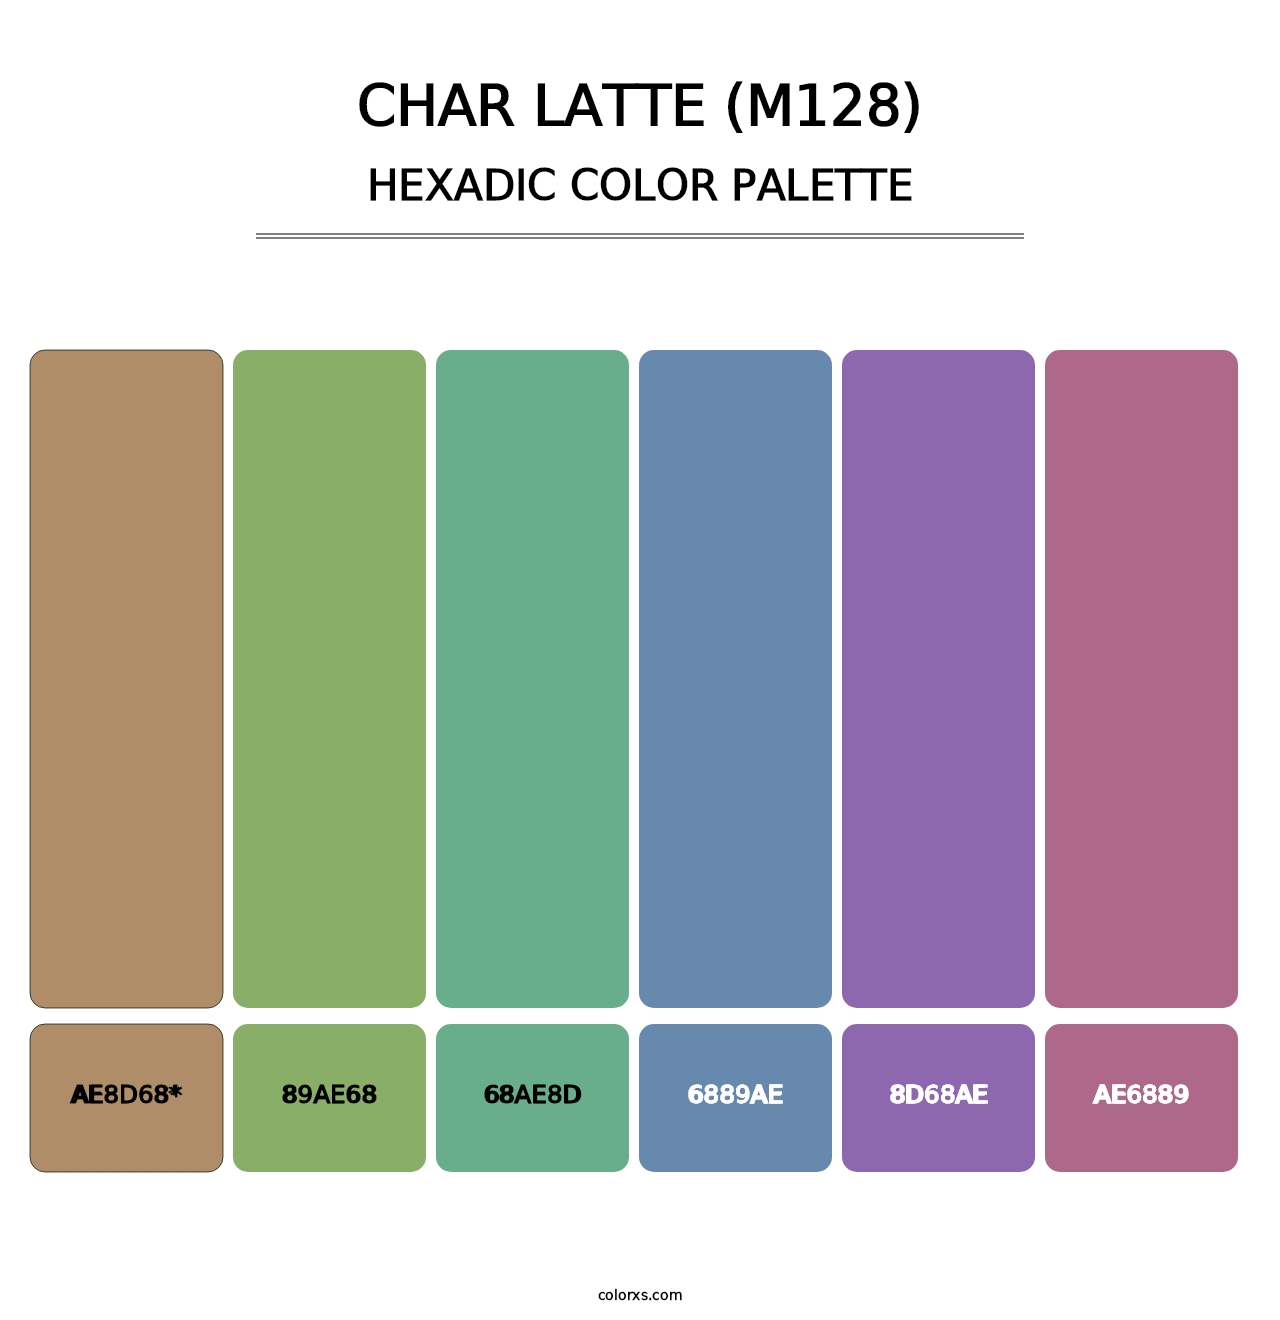 Char Latte (M128) - Hexadic Color Palette